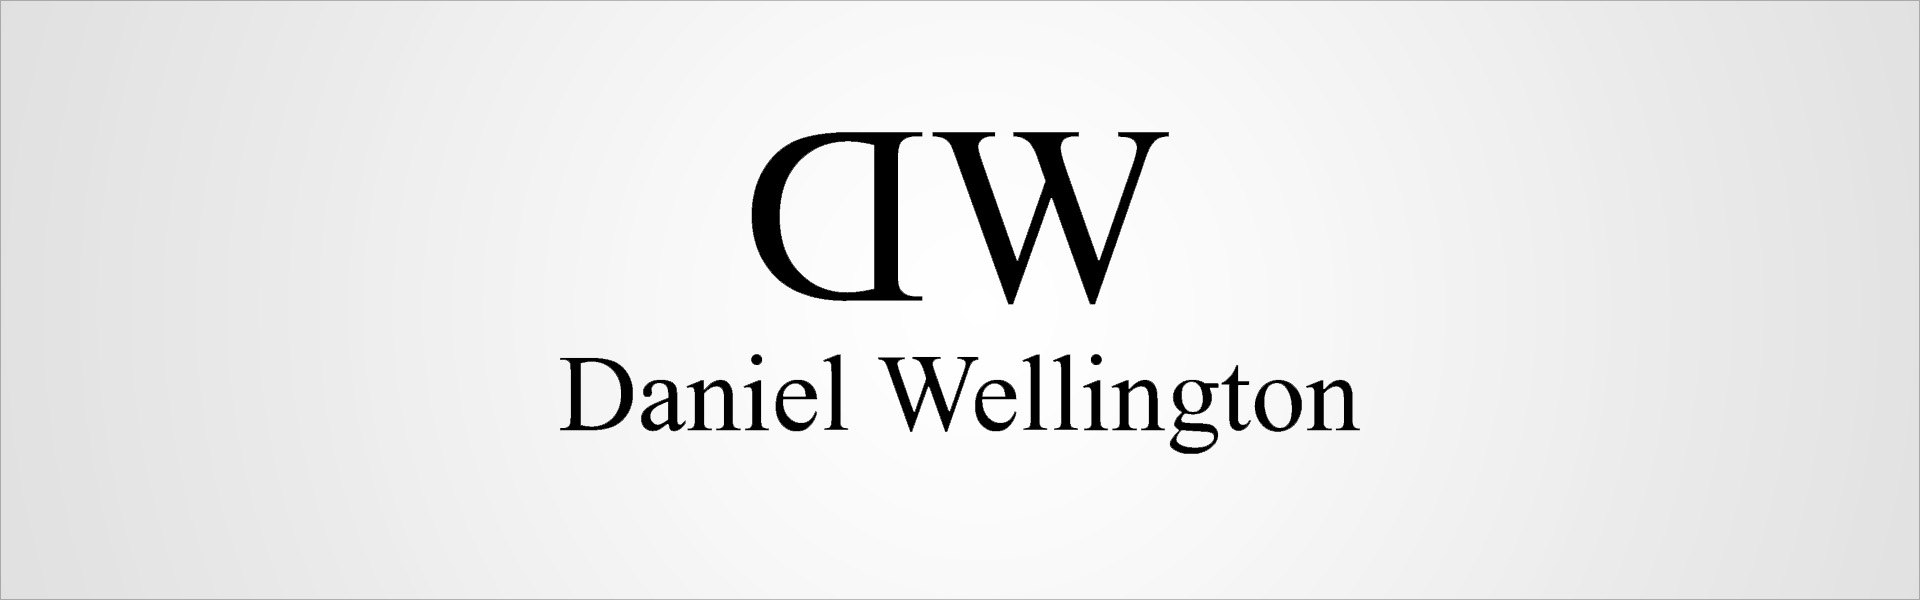 Daniel Wellington Quadro Studio naiste käekell Daniel Wellington